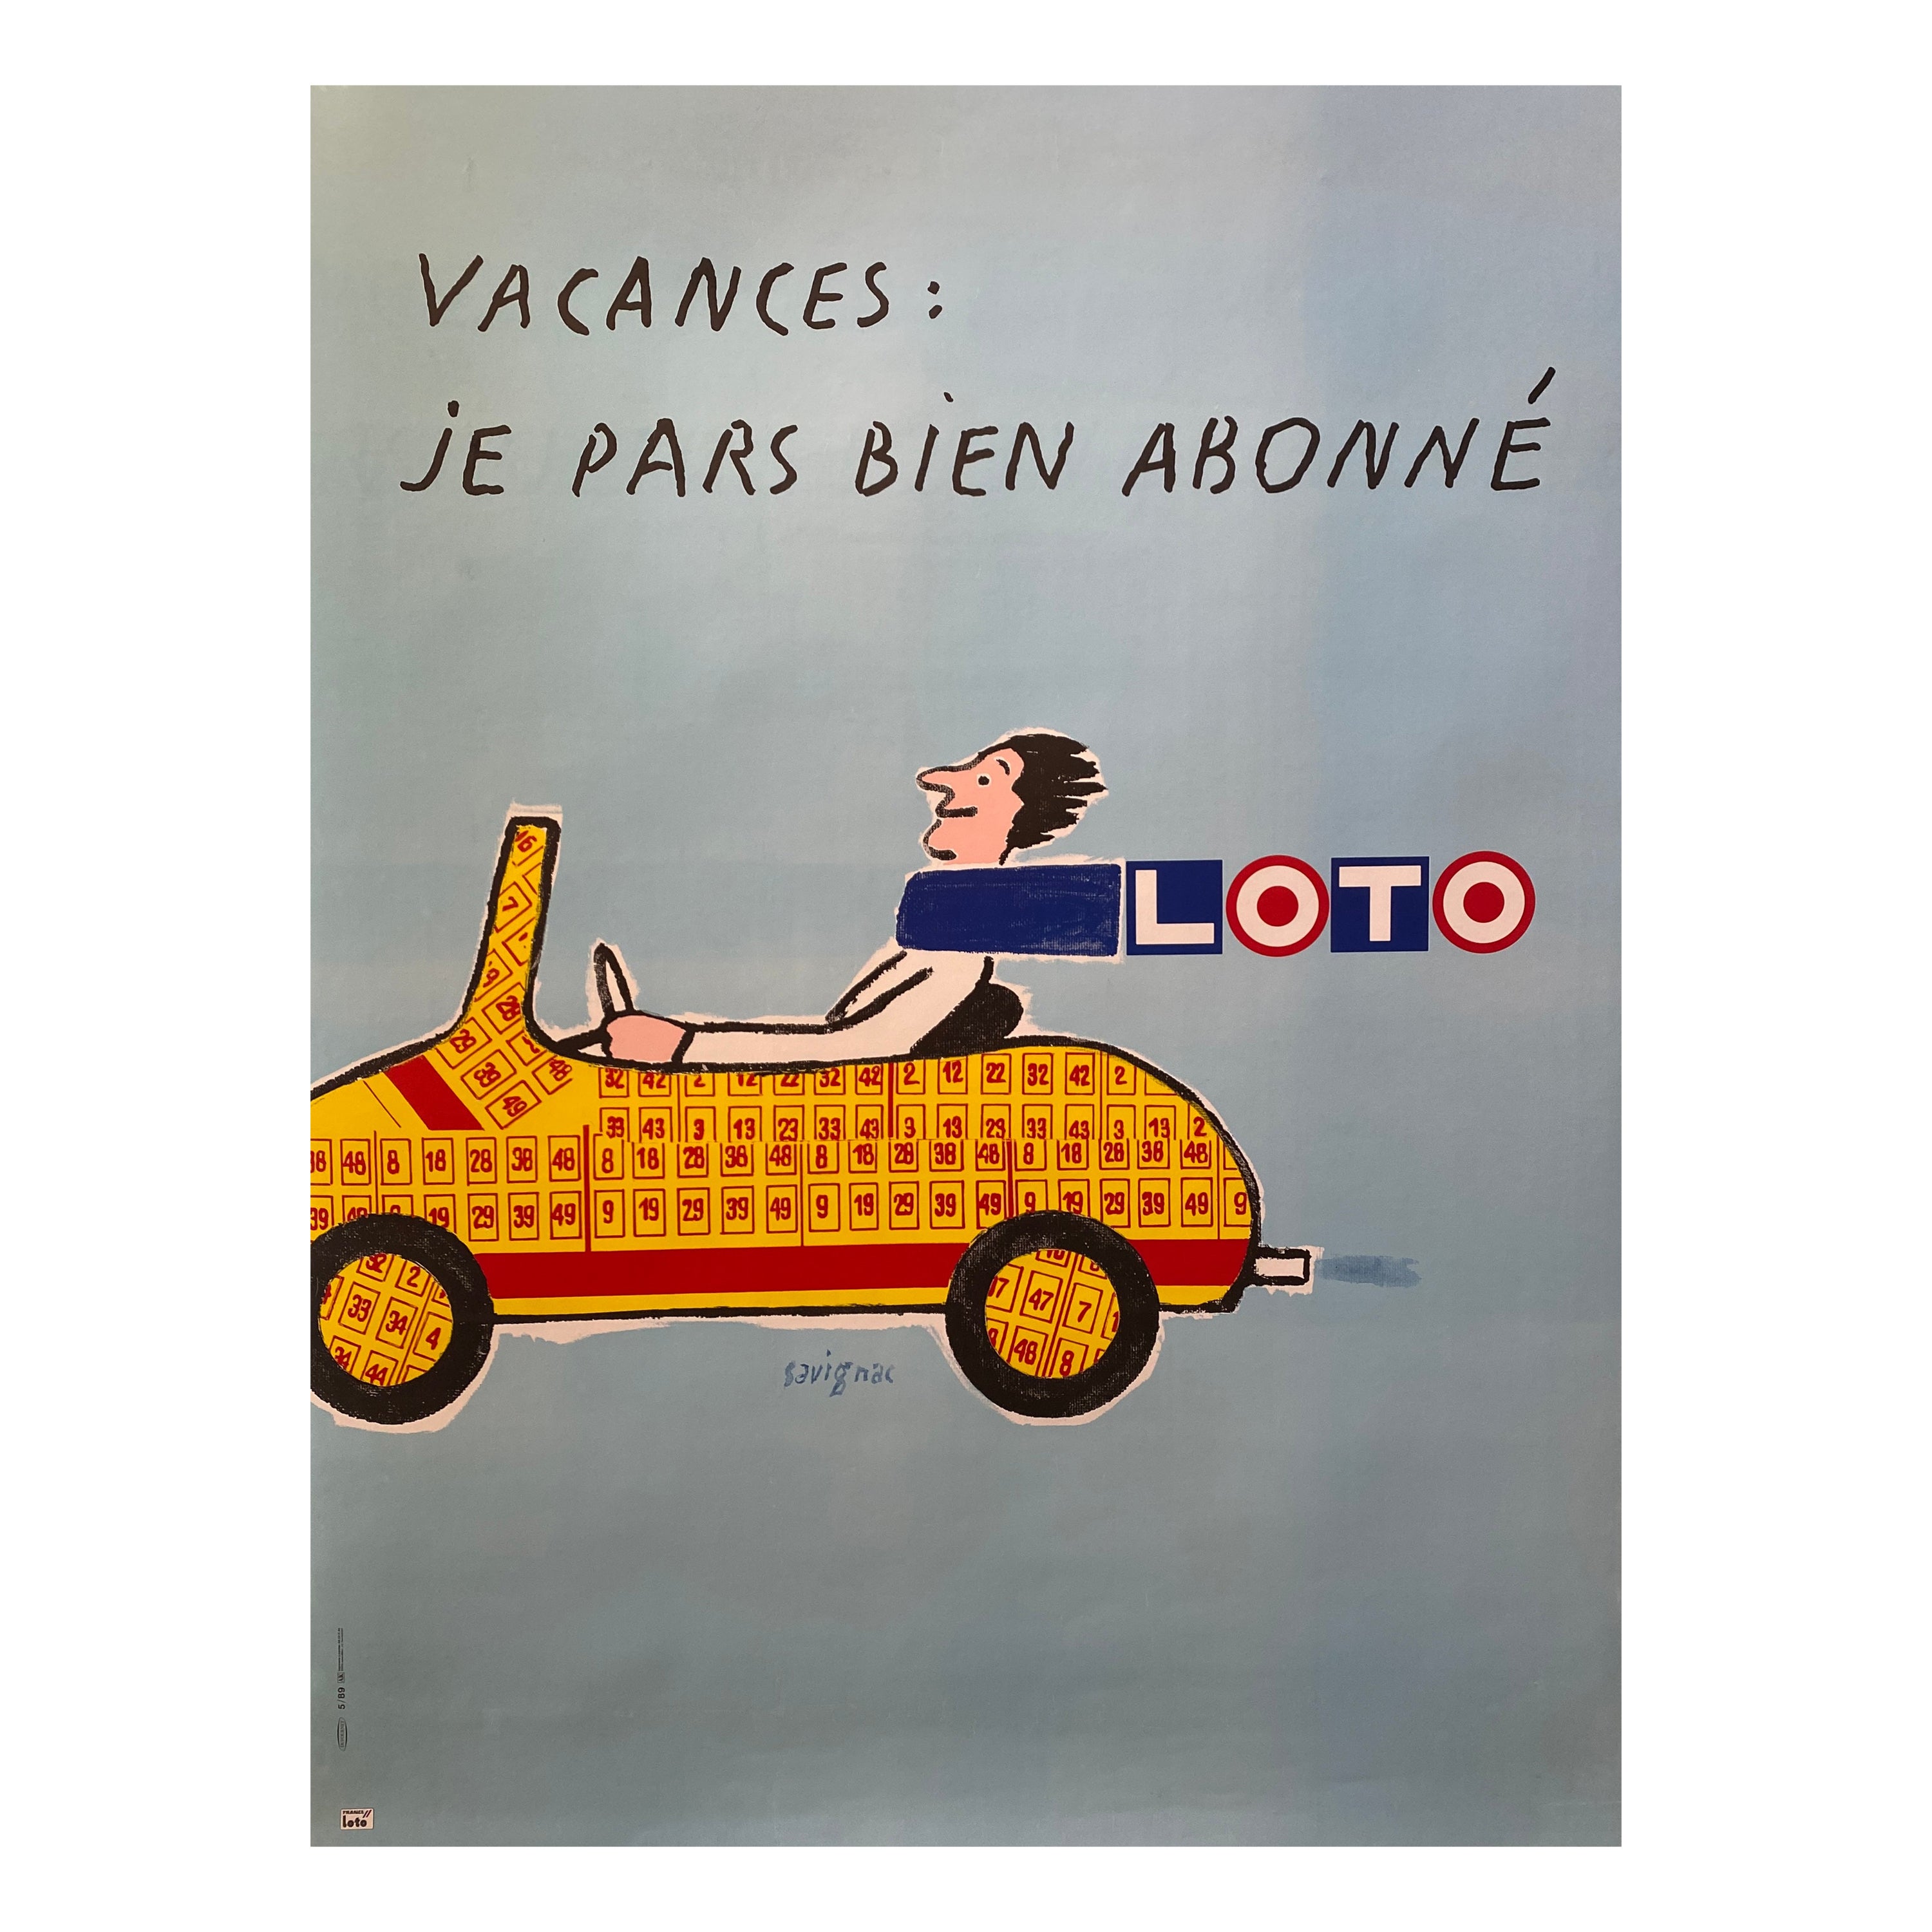 Original Vintage Poster, Loto, by Savignac